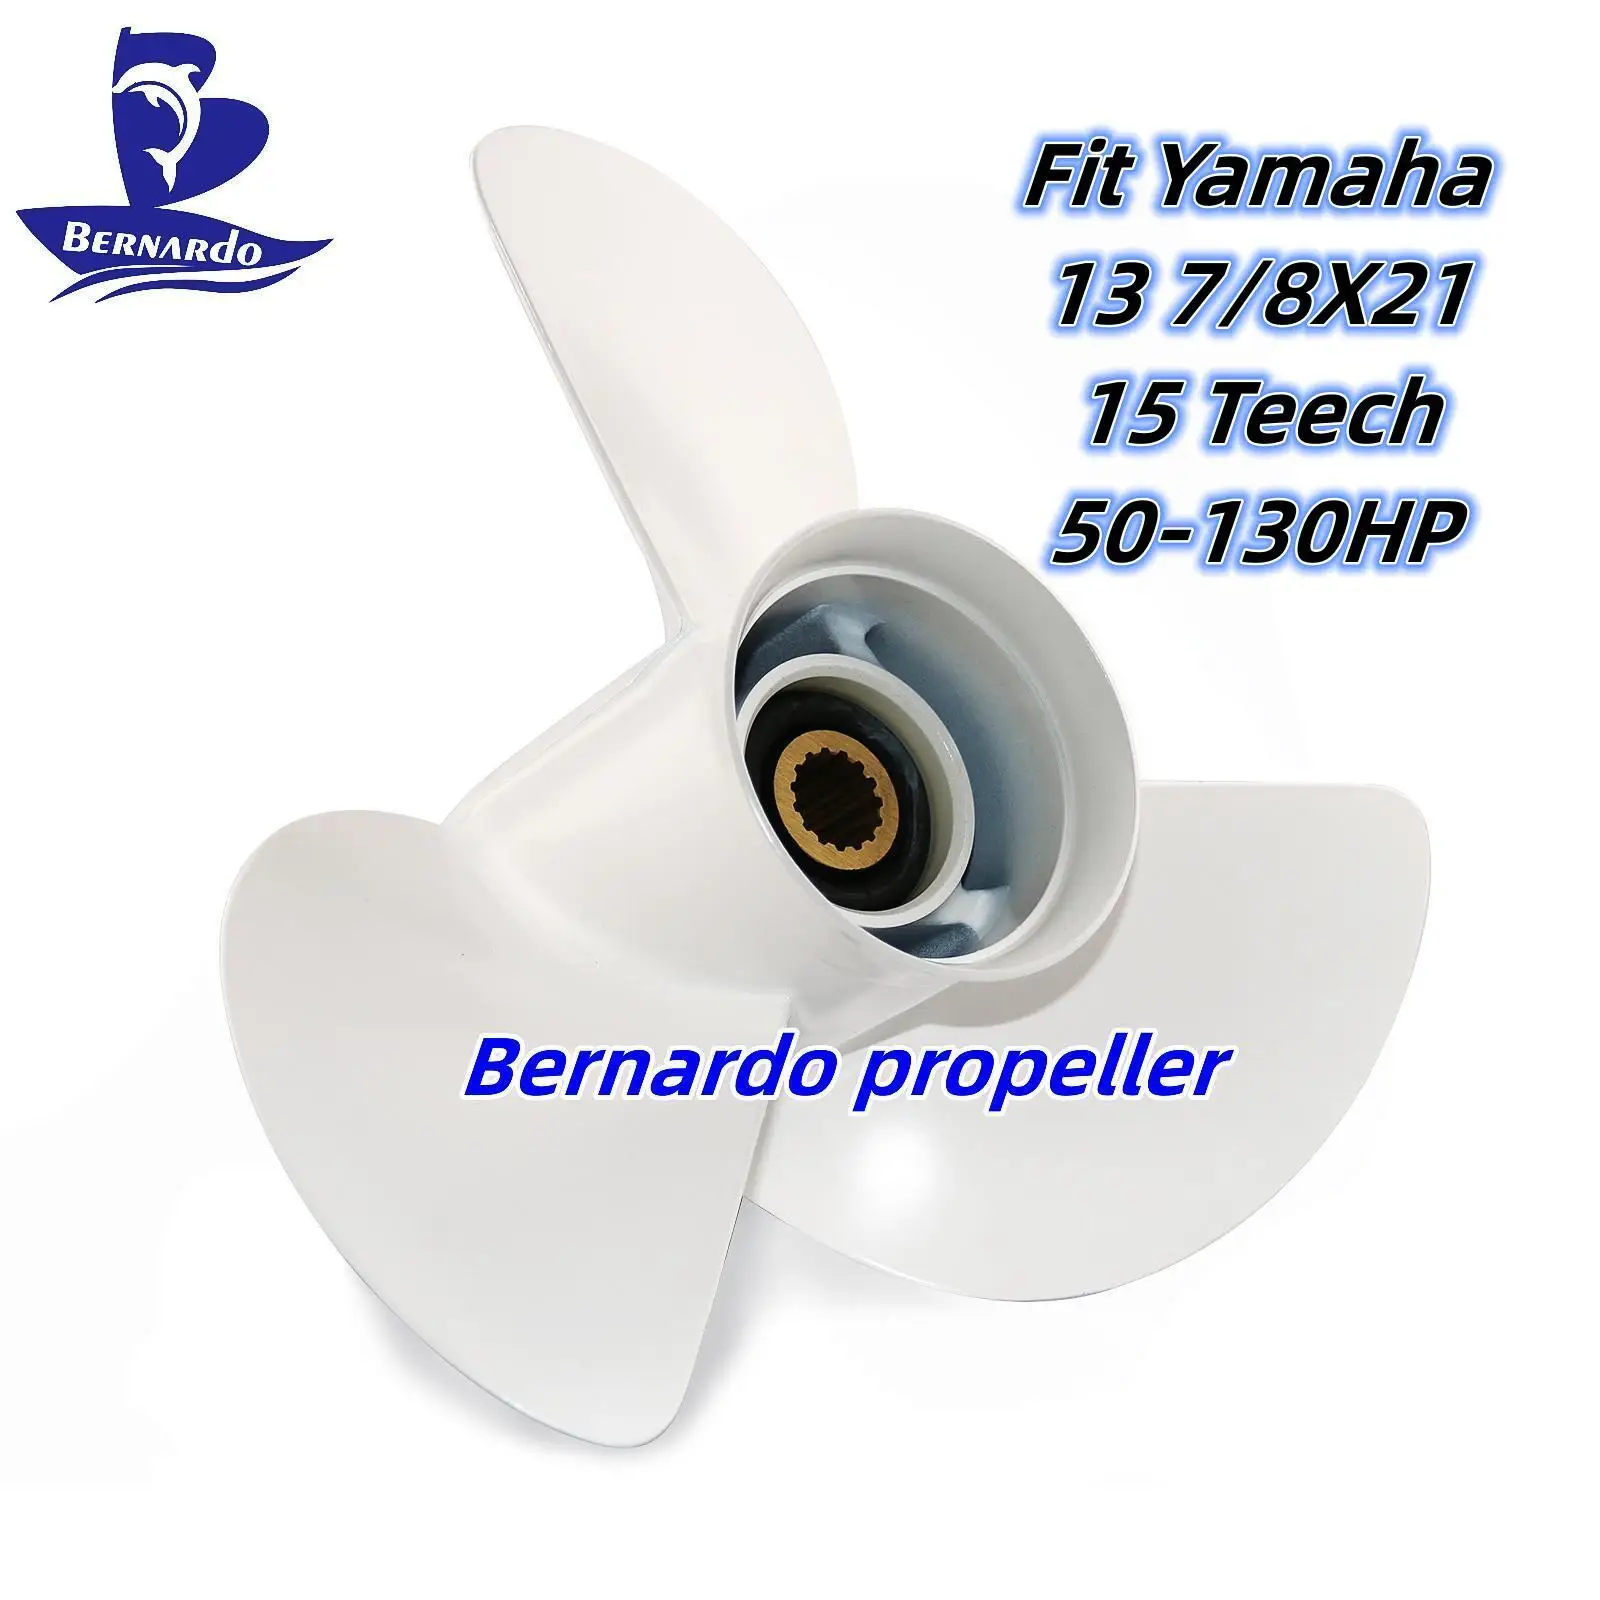 Bernardo Boat Propeller 13 7/8X21 Fit Yamaha Outboard Engine 50 60 70 80 90 100 115 130HP Aluminum Alloy 3 Blade 15 Tooth Spline